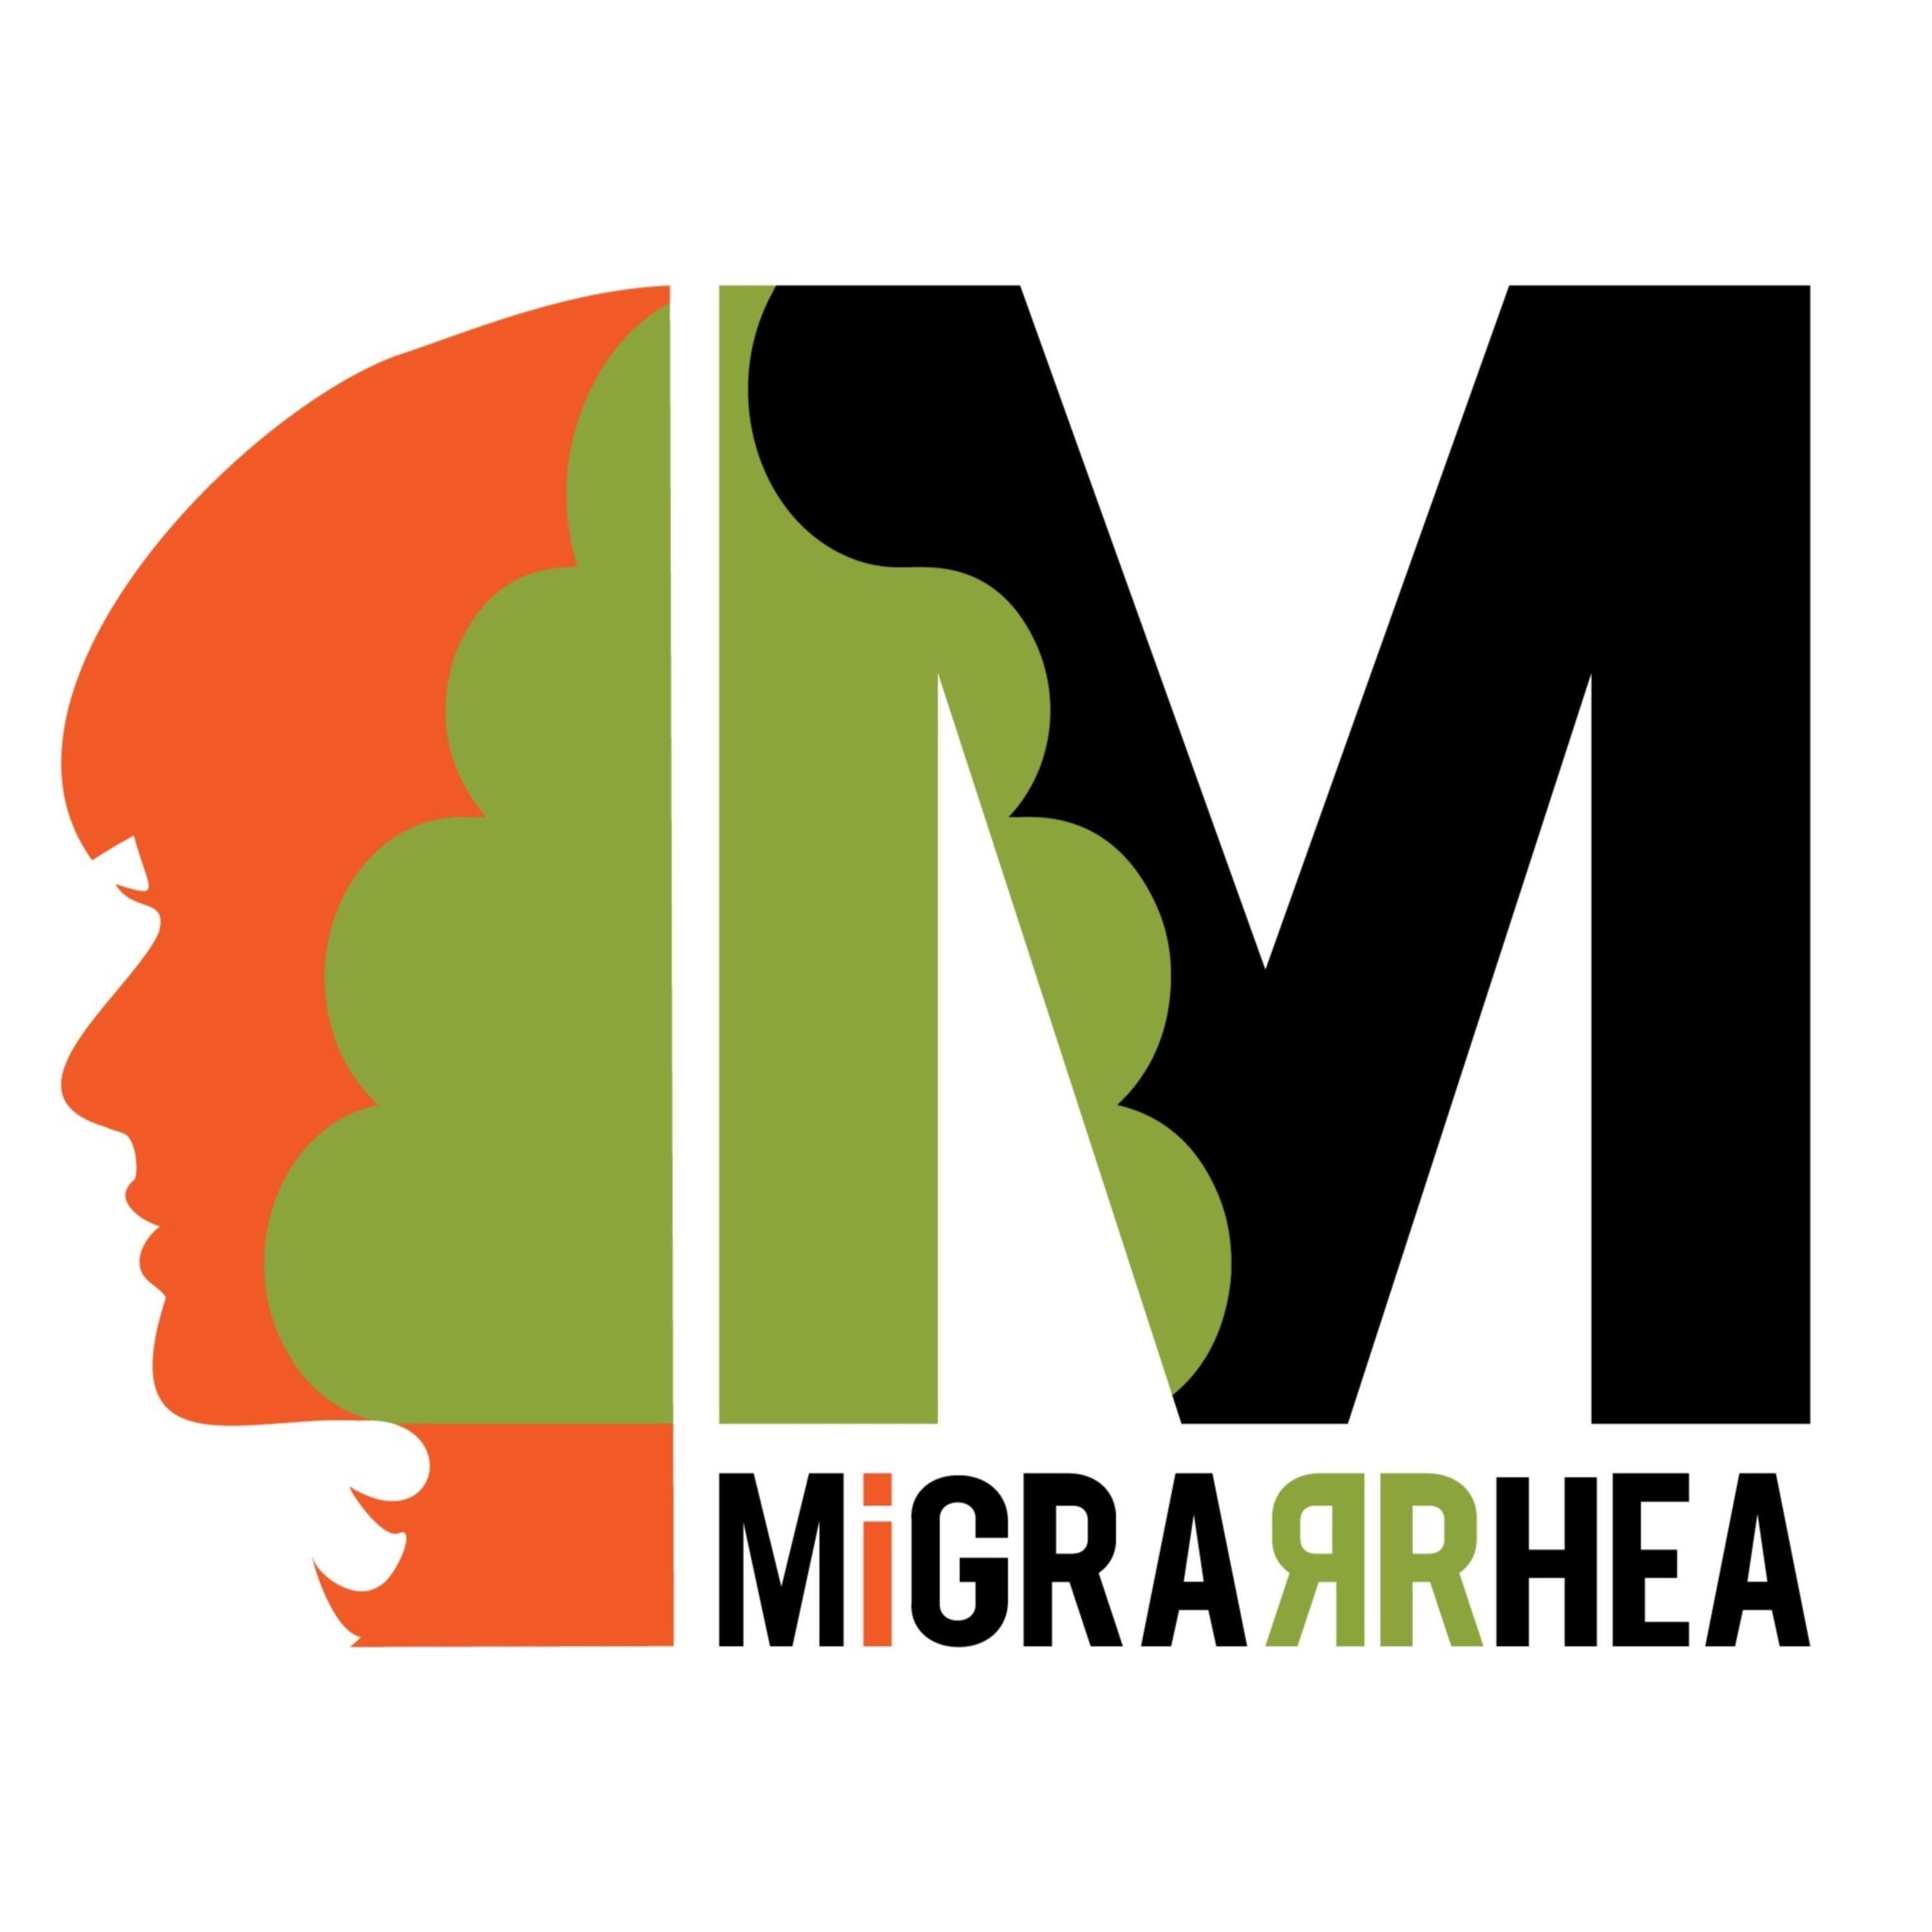 Migrarrhea